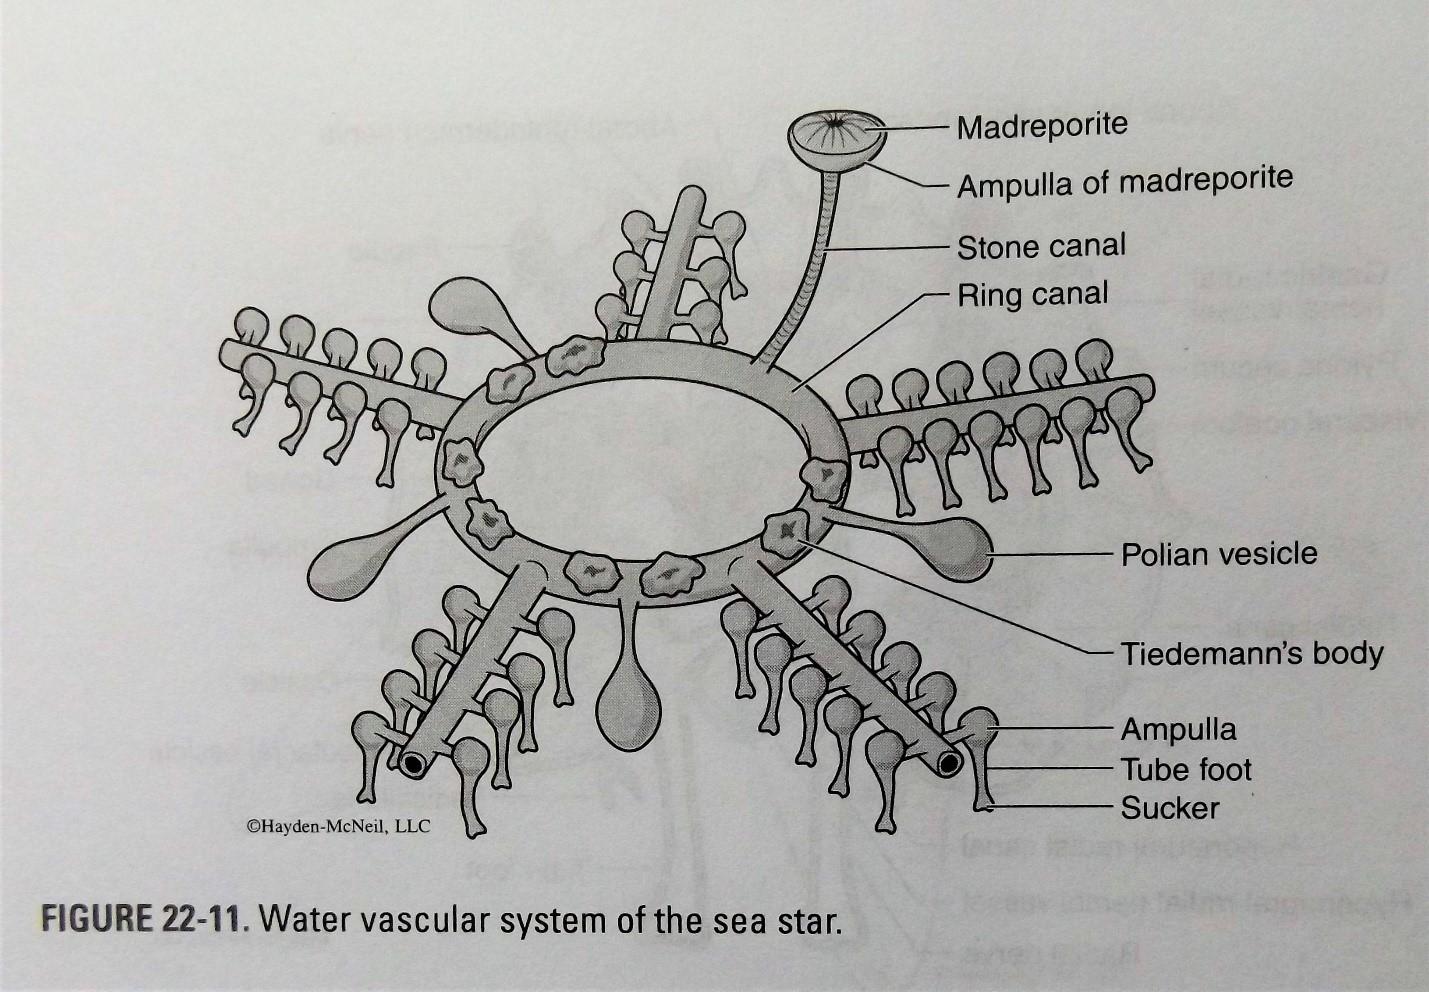 Water Vascular System - Wikipedia, The Free Encyclopedia PDF